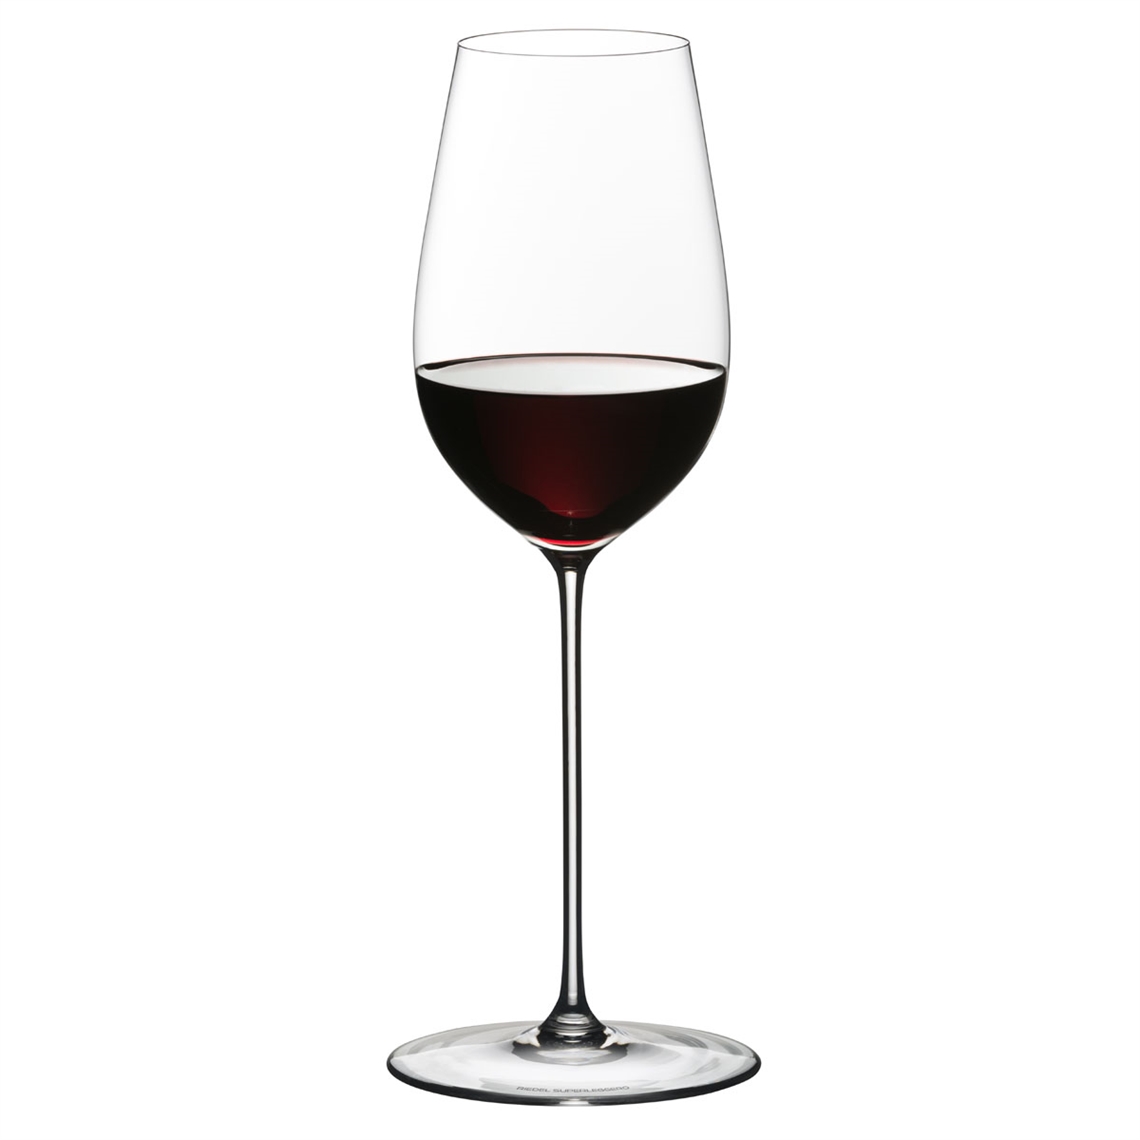 Riedel Superleggero Riesling/Zinfandel Wine Glass - 6425/15